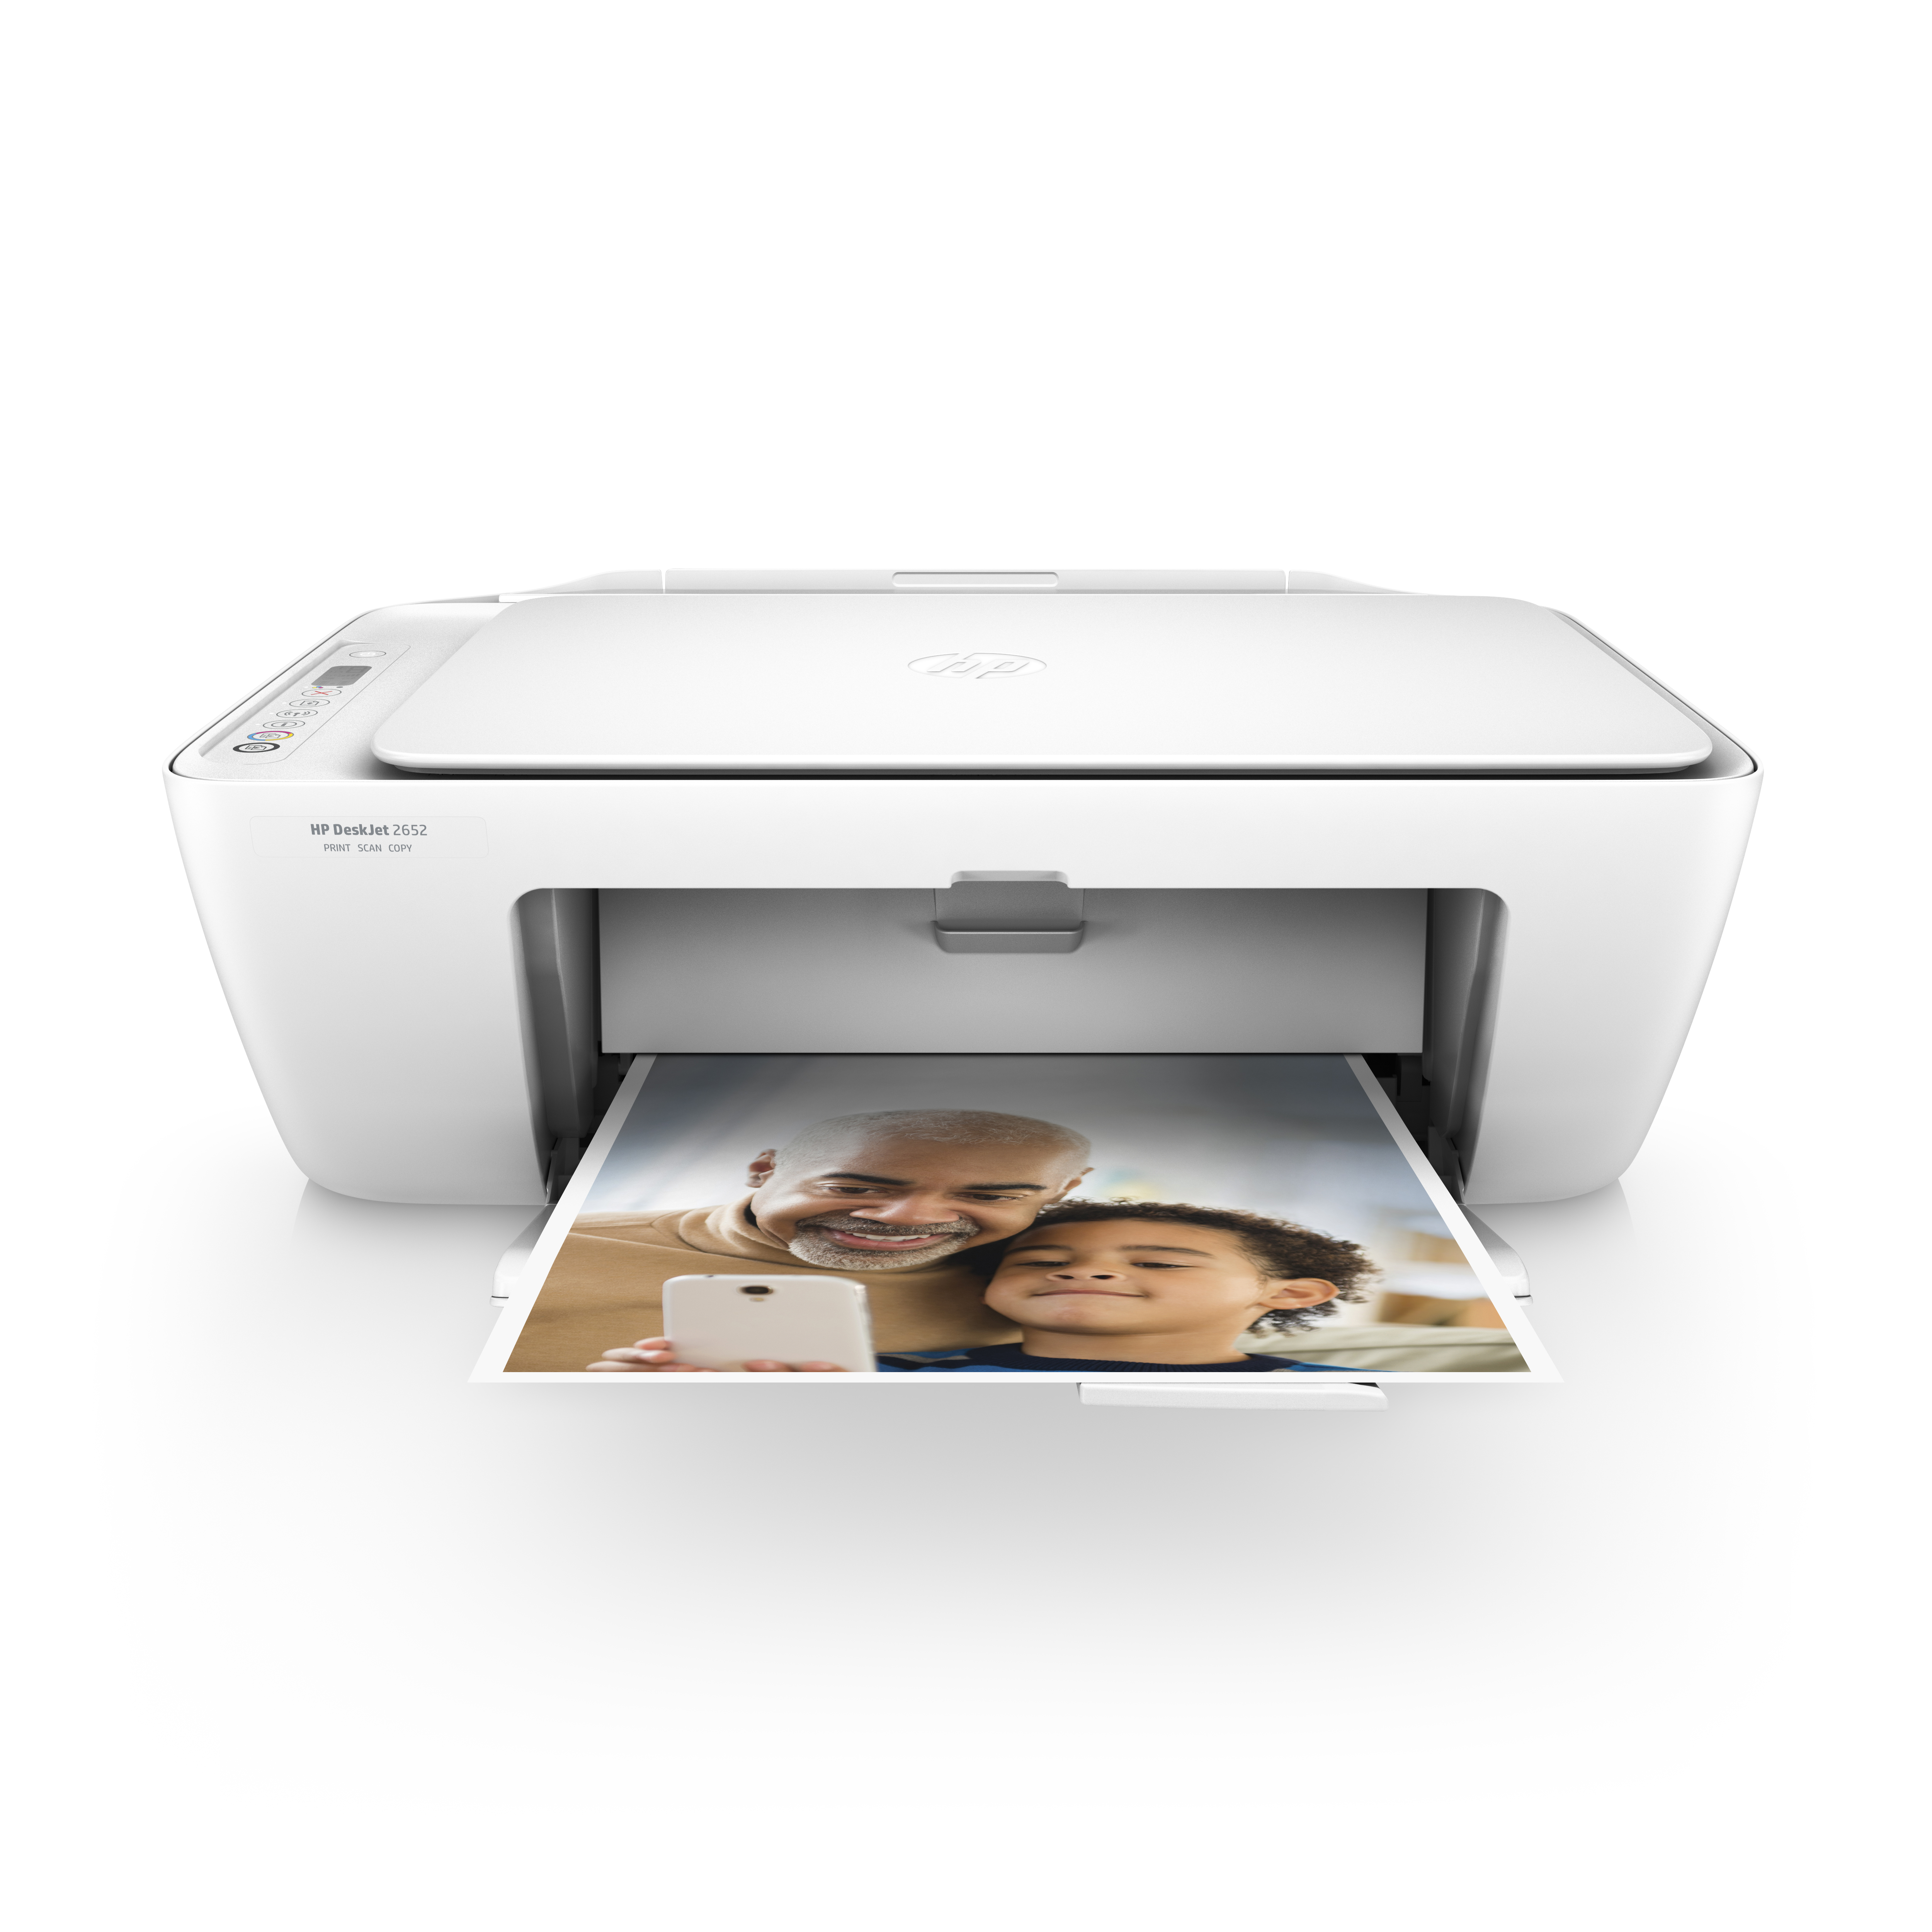 HP DeskJet 2652 All-in-One Wireless Color Inkjet Printer - Instant Ink Ready, White - image 1 of 20